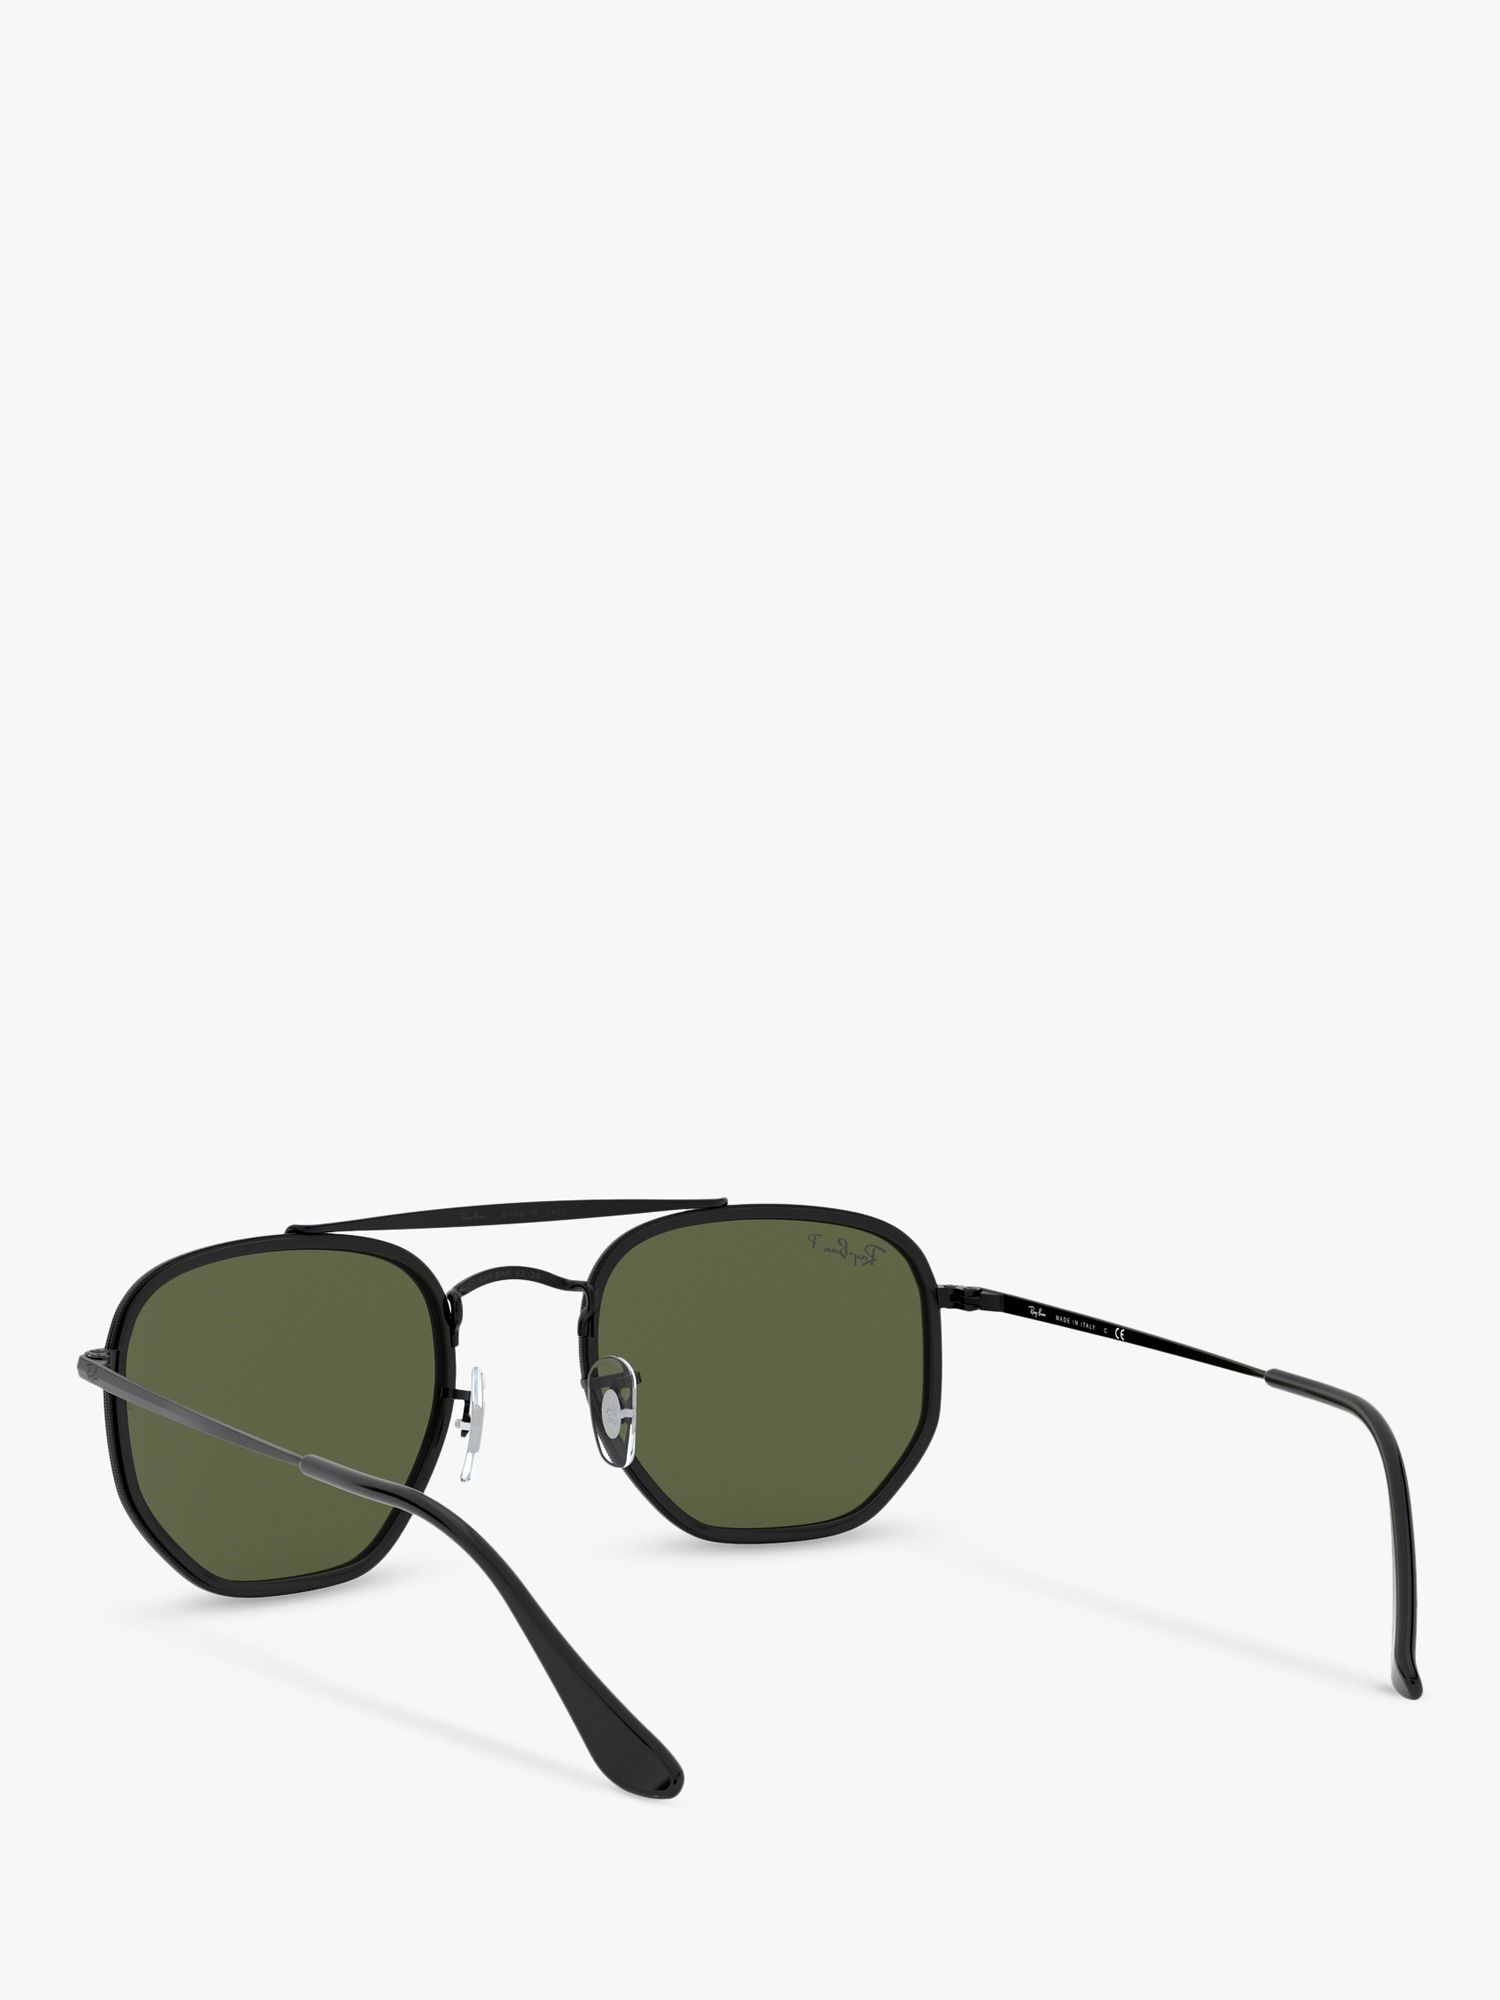 Ray-Ban RB3648M Unisex The Marshal Polarised Irregular Sunglasses, Black/Green  at John Lewis & Partners